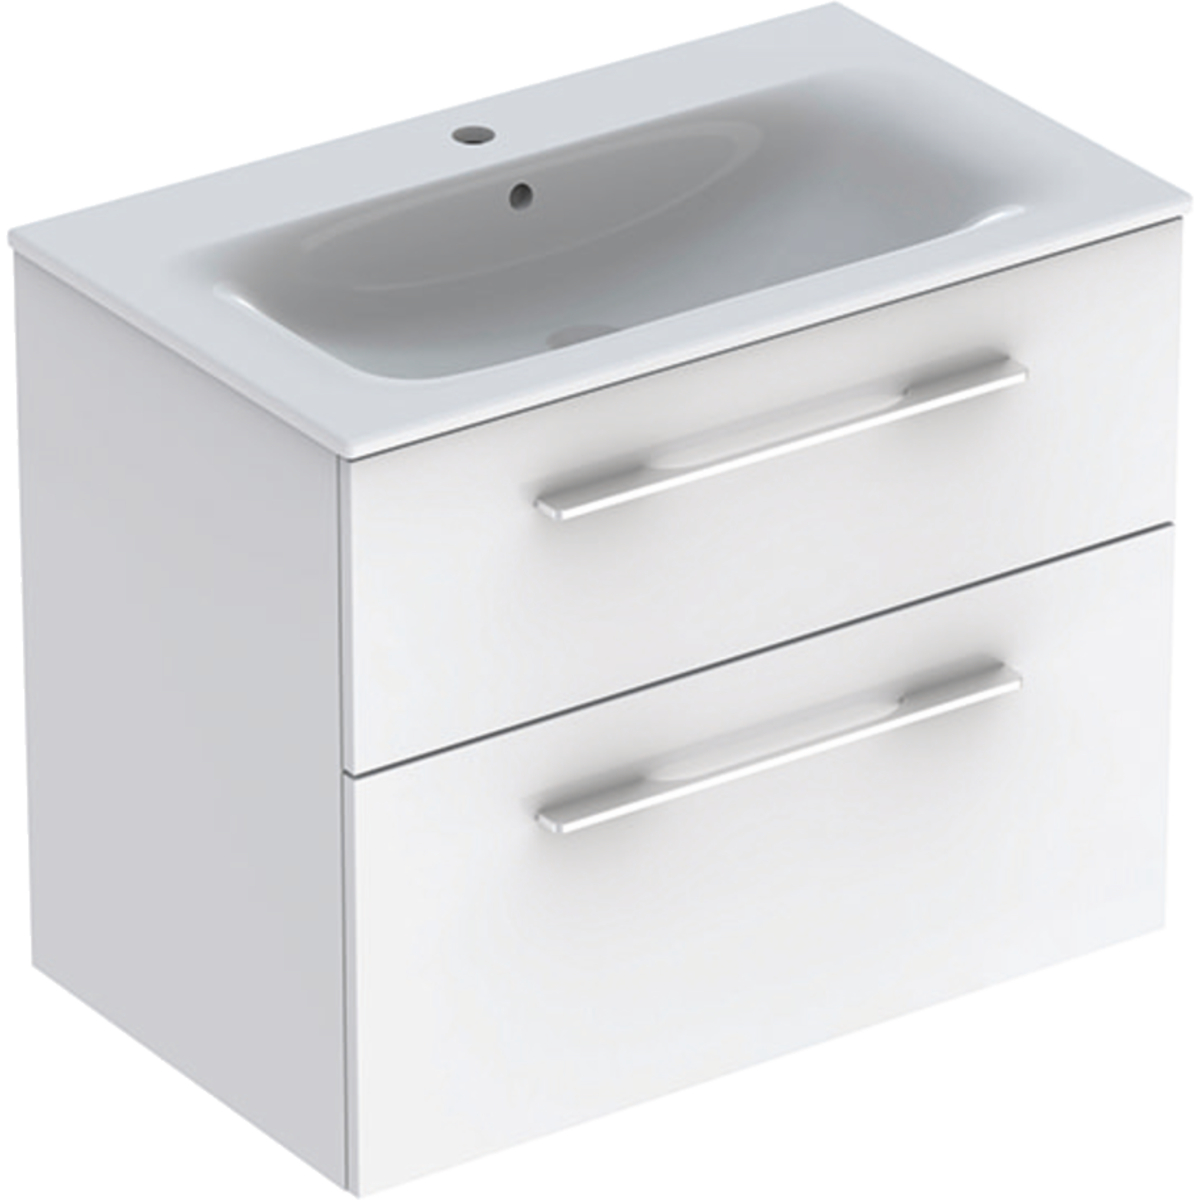 Geberit 501240001 Square S 800mm Slim Basin & Two Drawer Vanity Unit - White